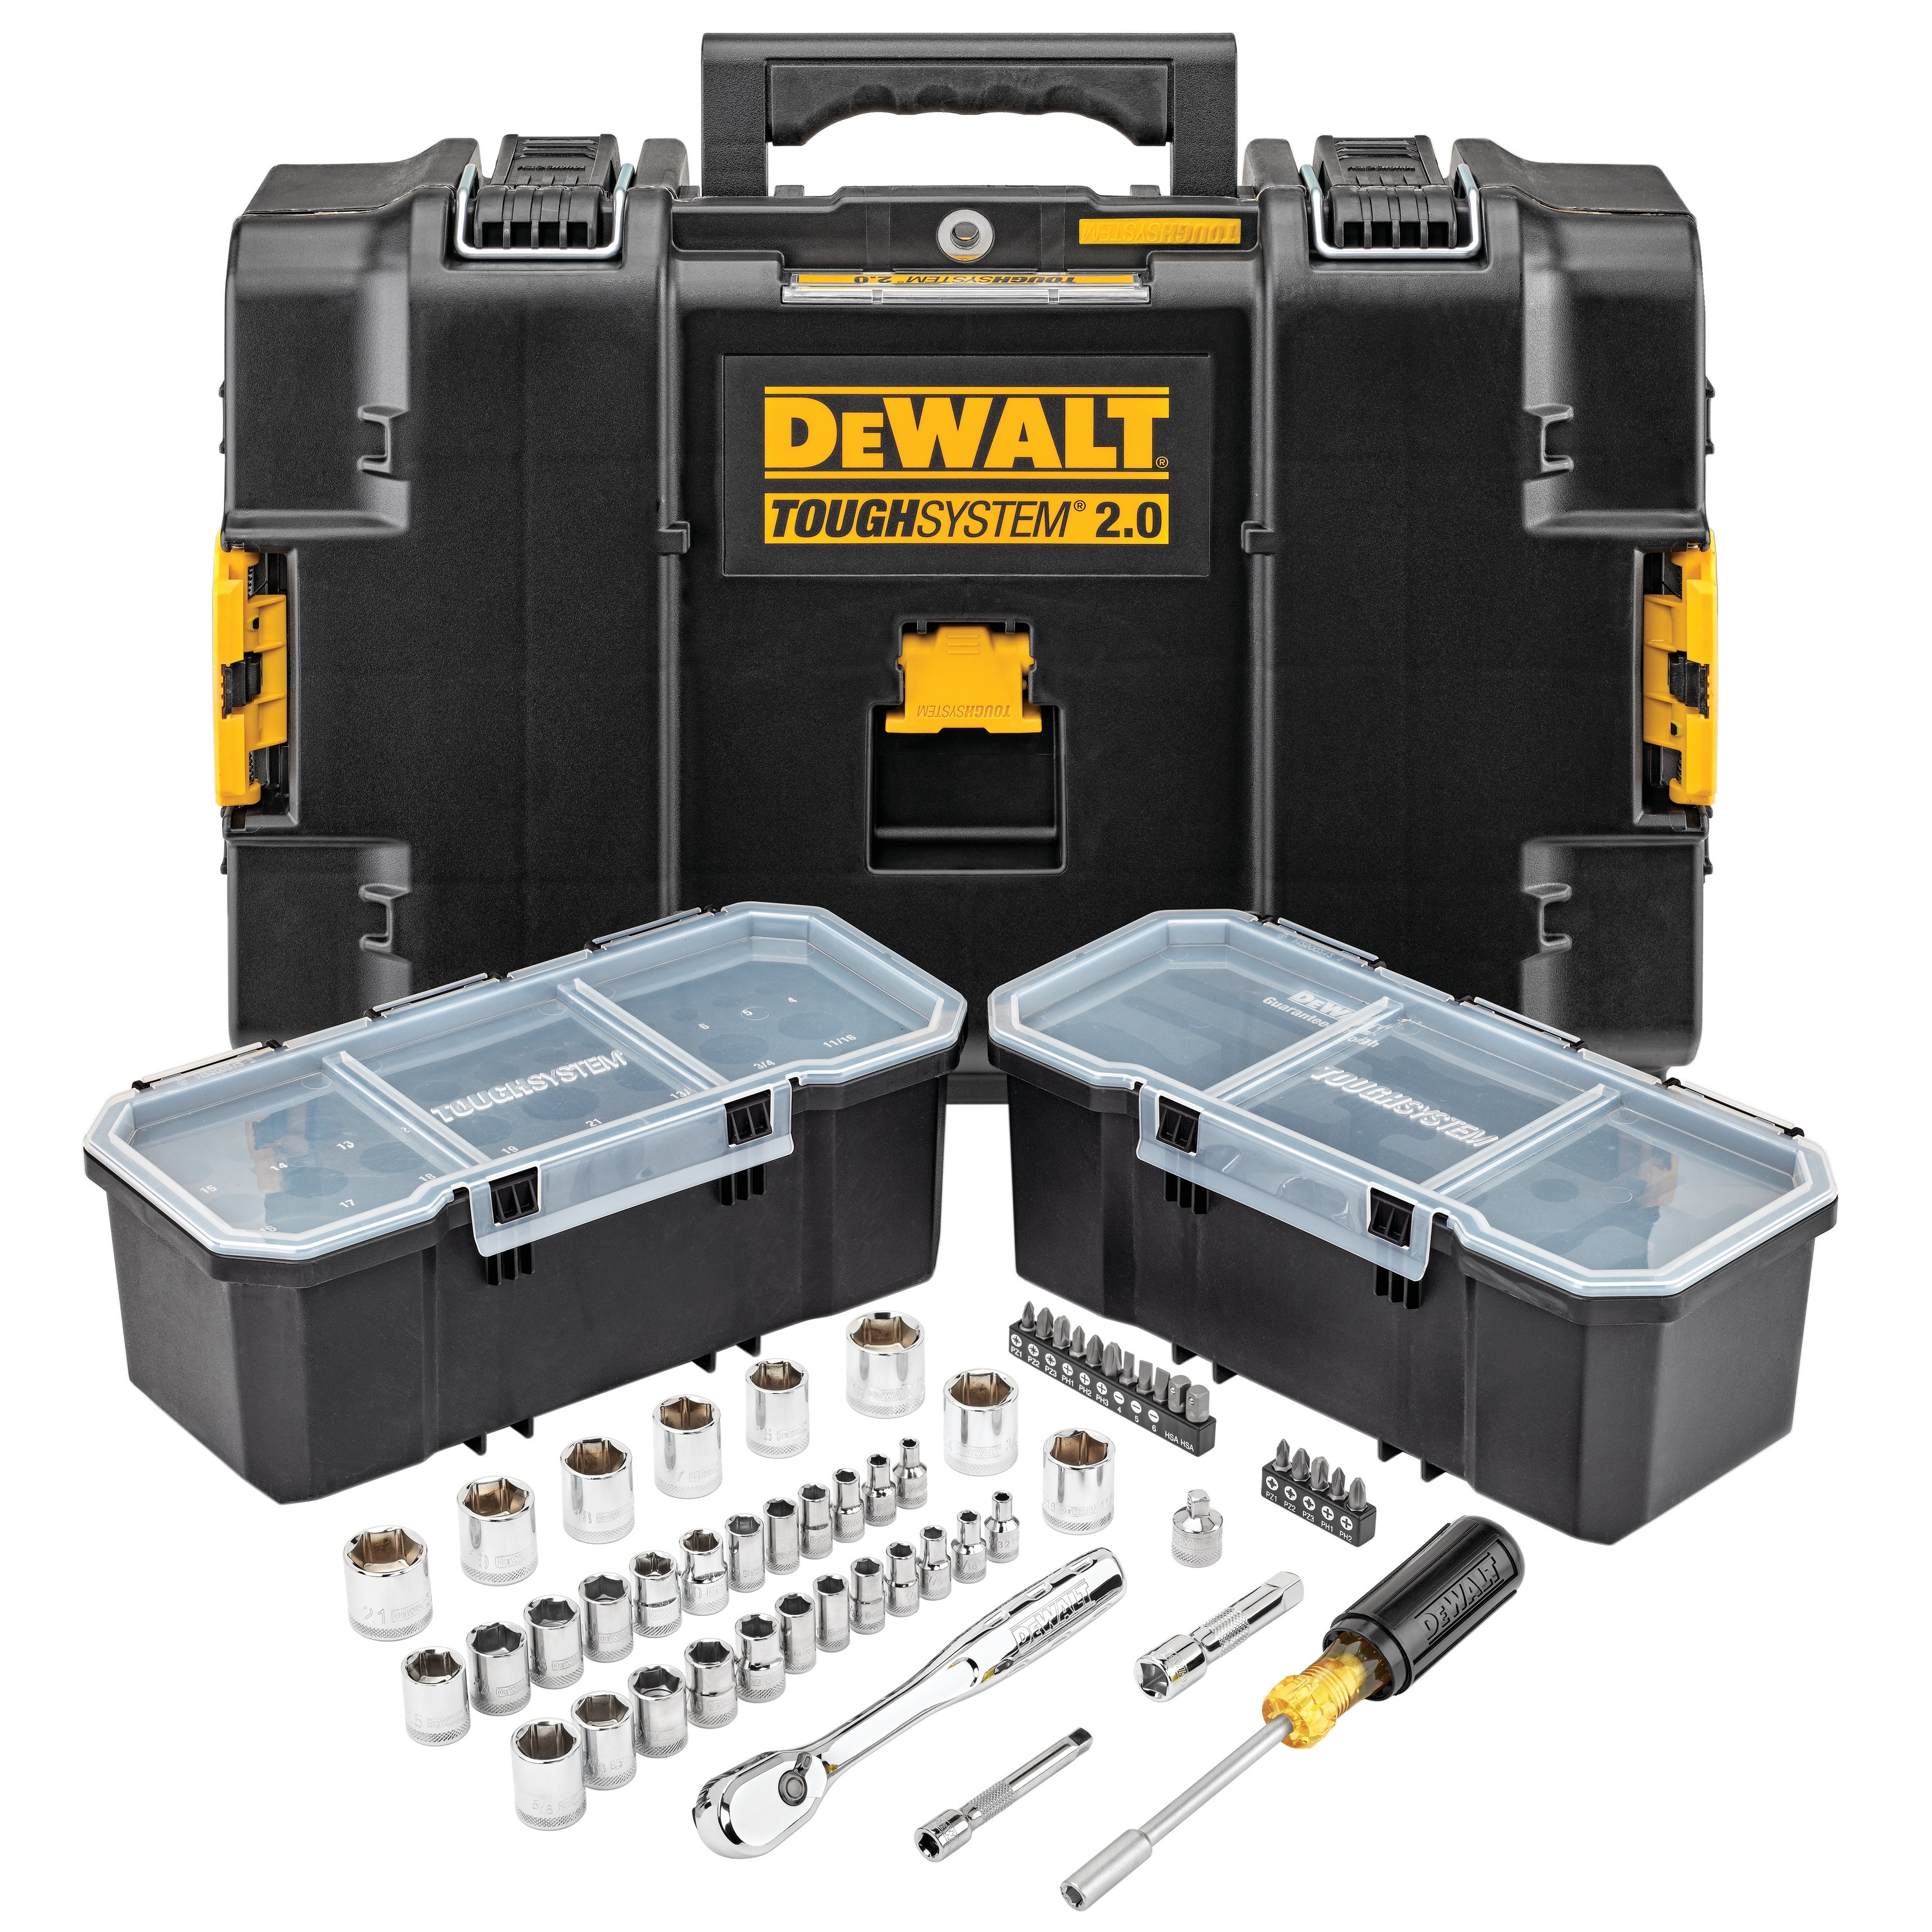 Profile of DEWALT 53 piece mechanics tool set with tough system 2.0 toolbox.